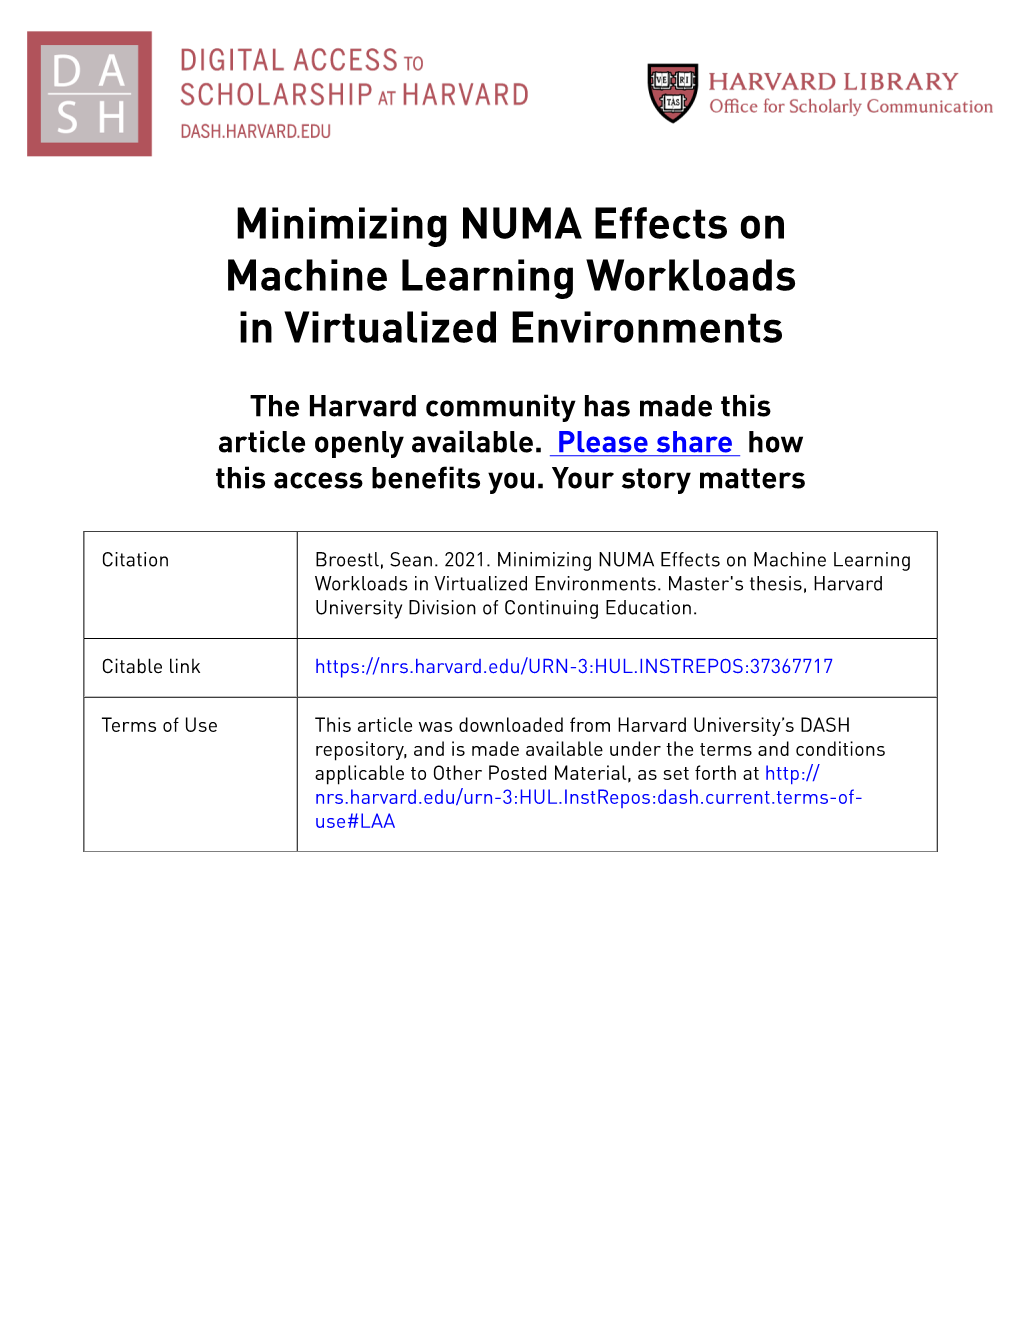 Minimizing NUMA Effects on Machine Learning Workloads in Virtualized Environments